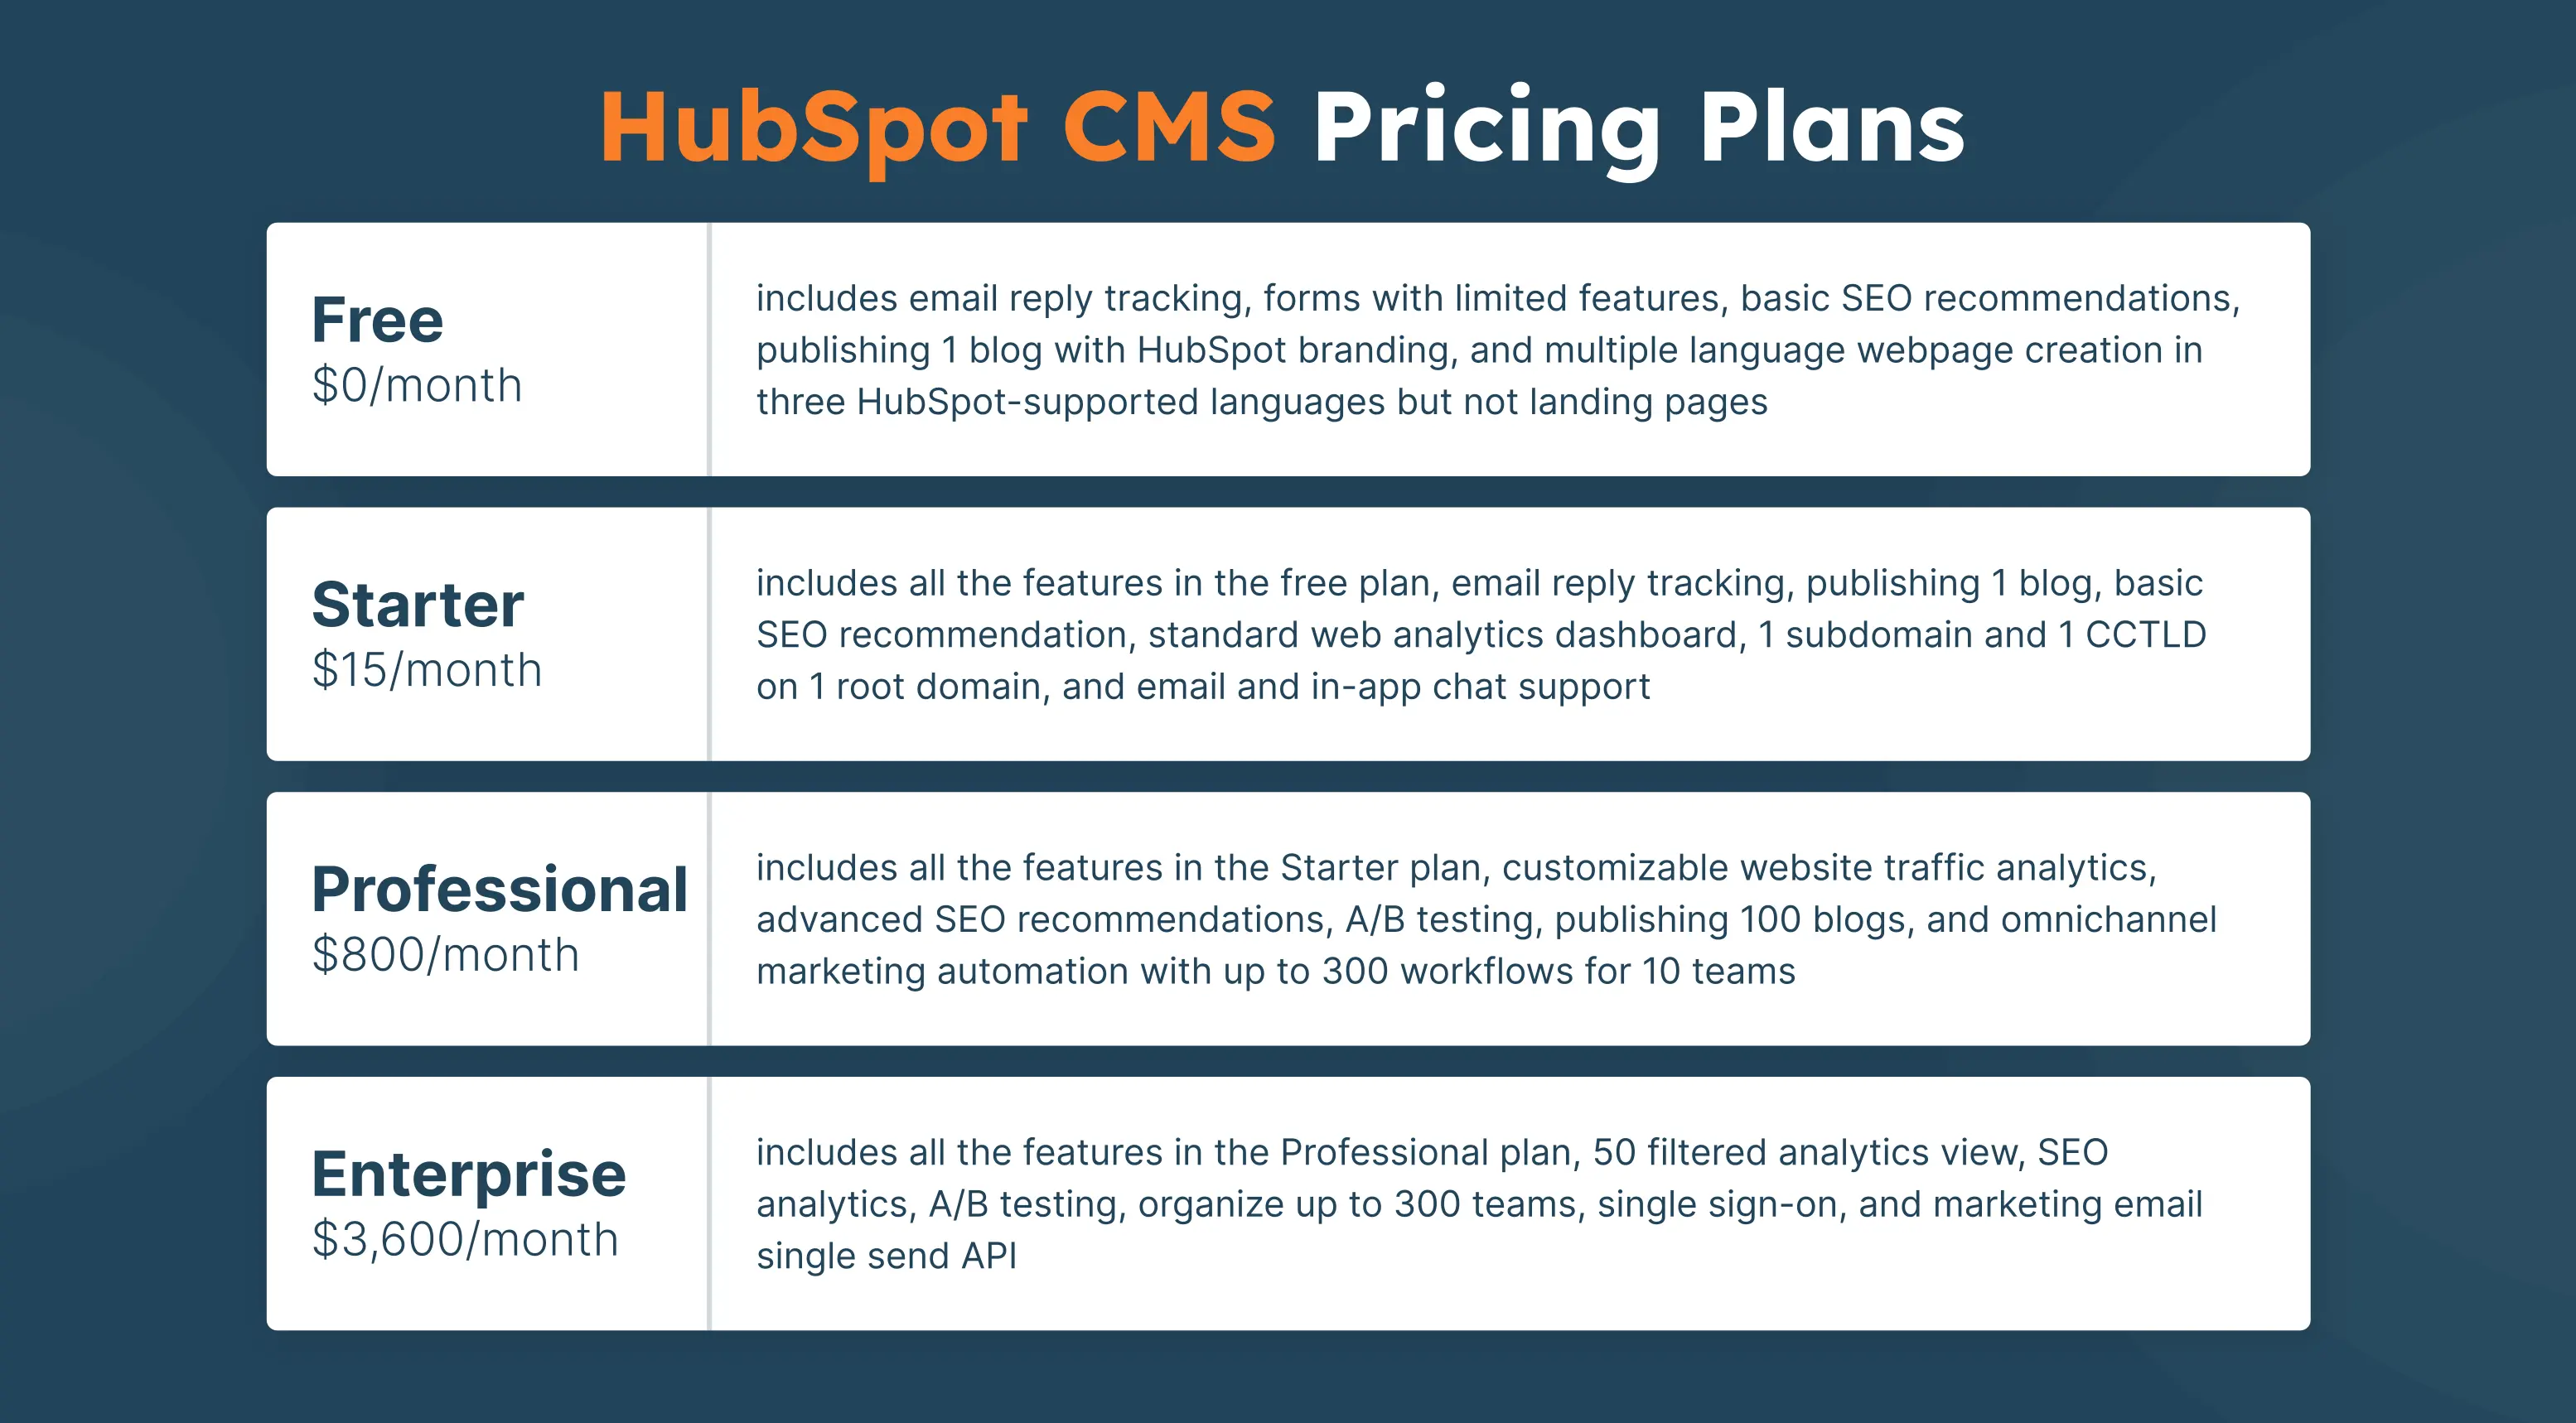 HubSpot CMS Pricing Plans